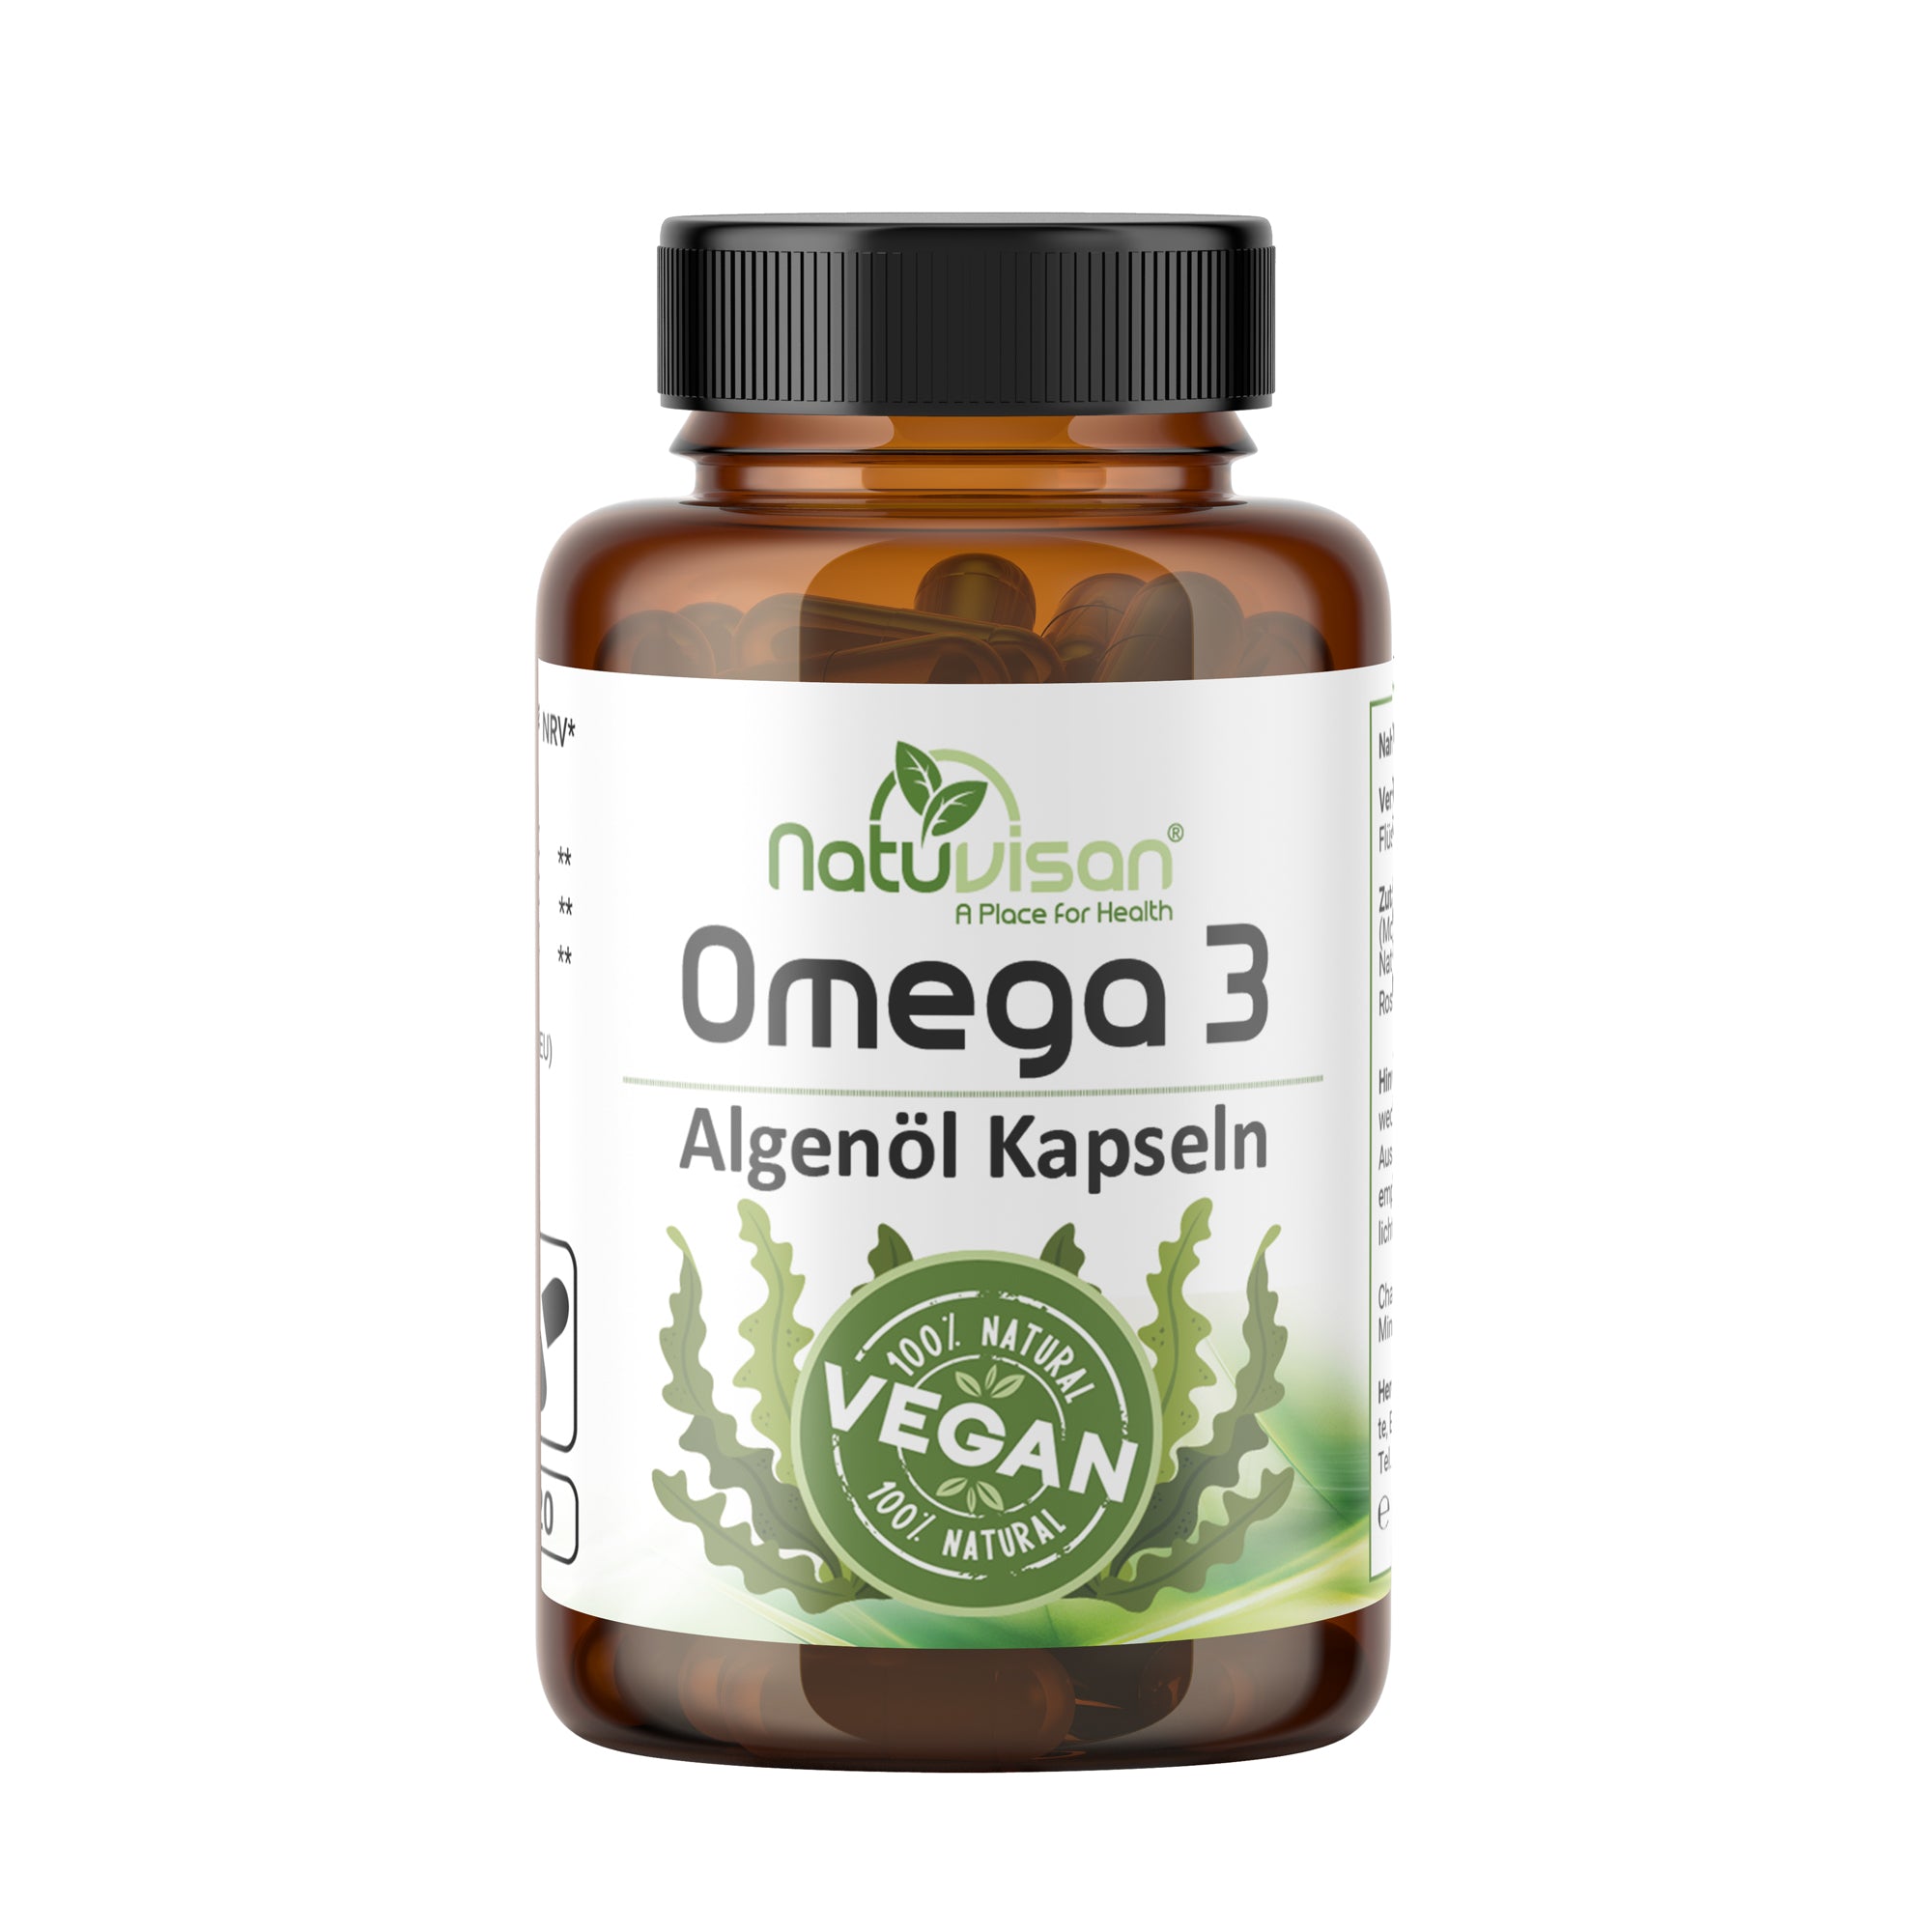 Omega 3 Algenöl 2000 mg mit Vitamin E + Rosmarin - TOTOX= 4 - zertifiziert und reich an DHA/EPA vegan - 120 Kapseln